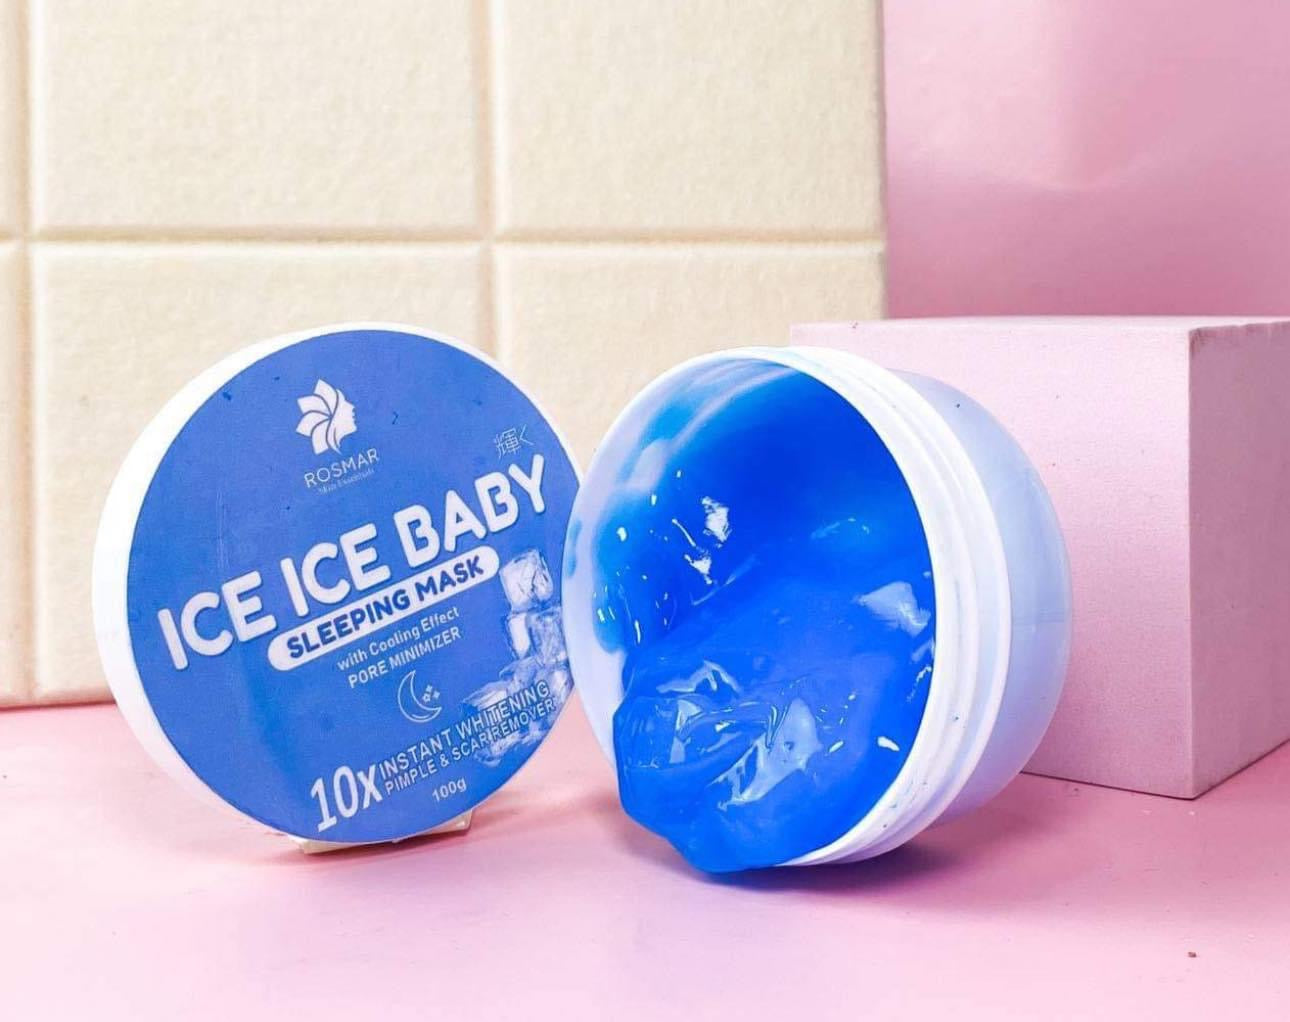 Rosmar Kagayaku Ice Ice Baby Sleeping Mask 100g